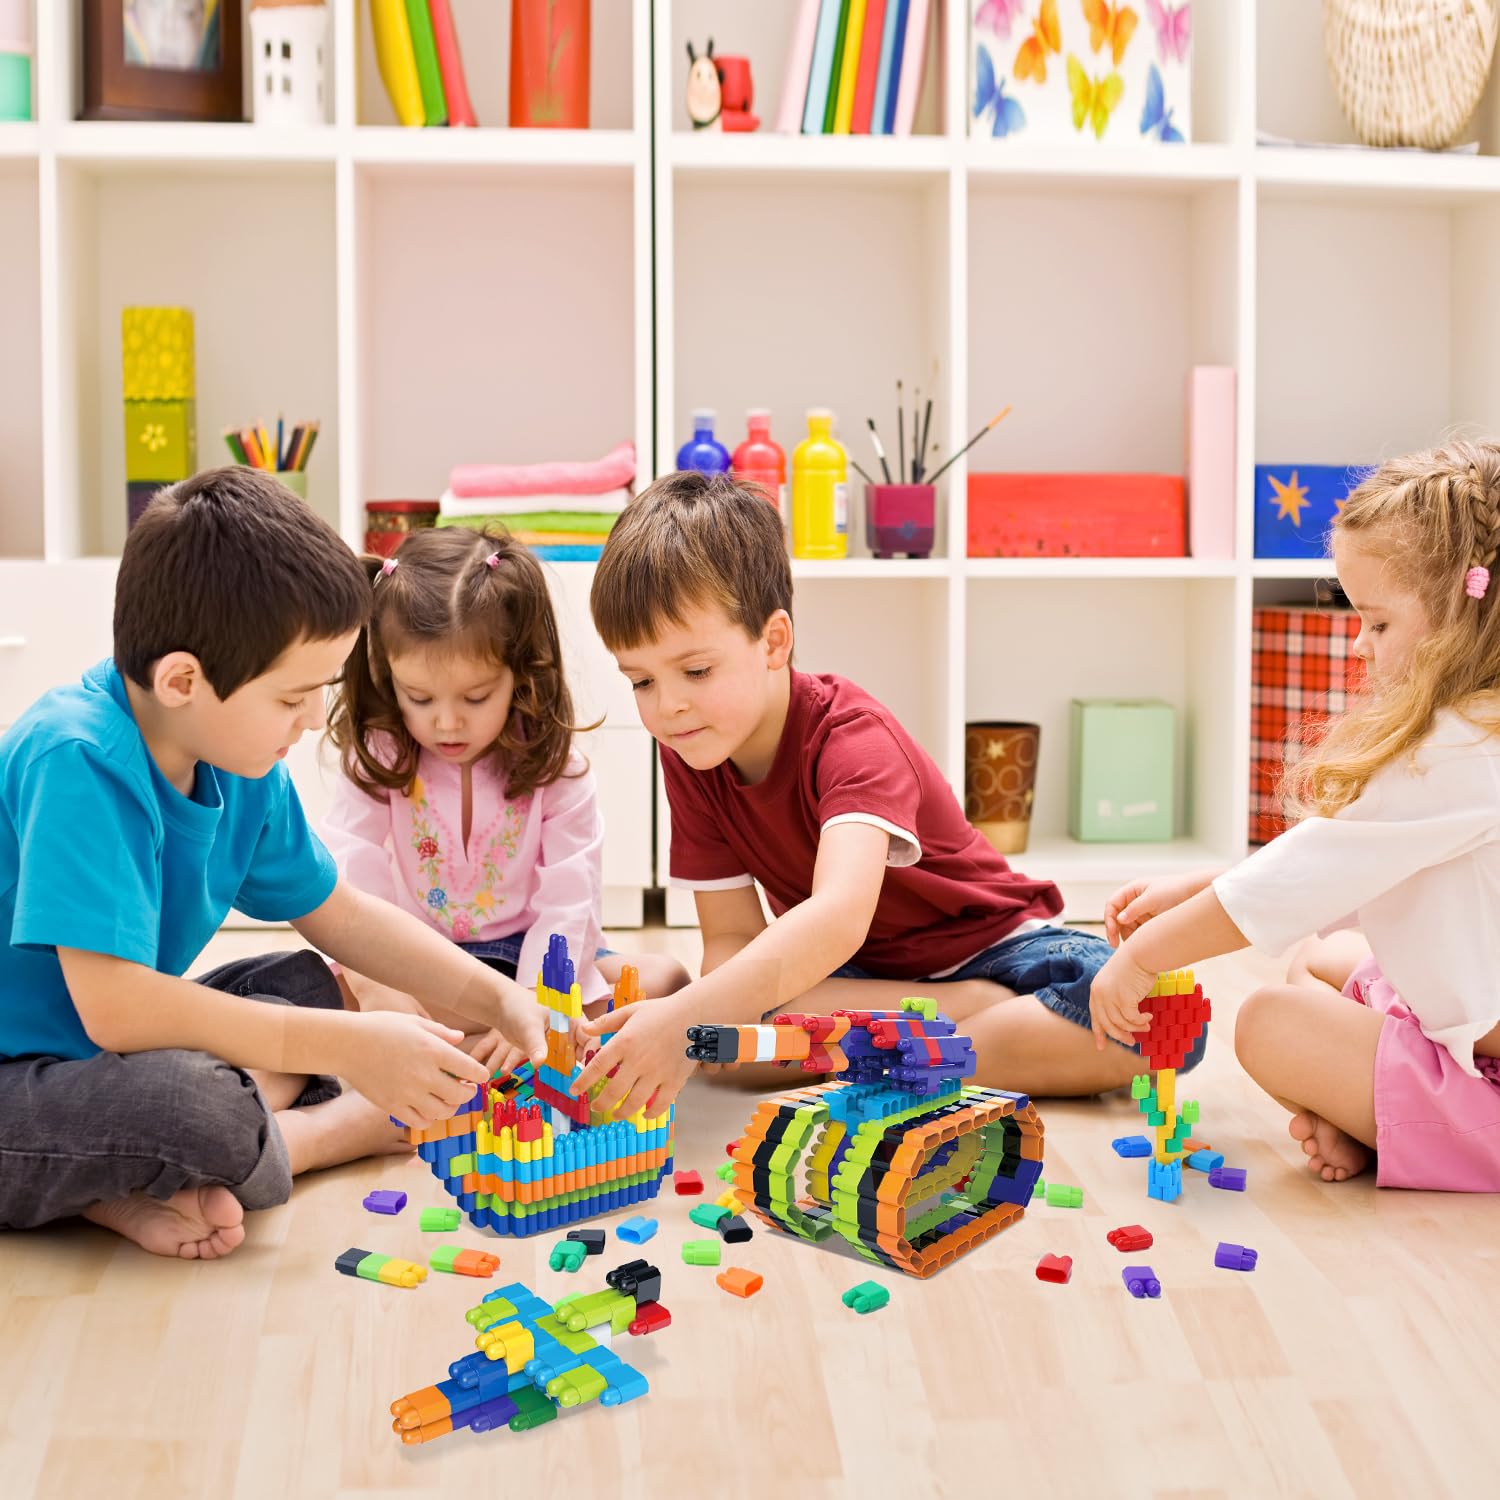 HOLYFUN Building Blocks Set Toy, Classroom Learning Playset STEM Educational Kit Preschool Kindergarten Toy for Kids, Toddler, Boys and Girls